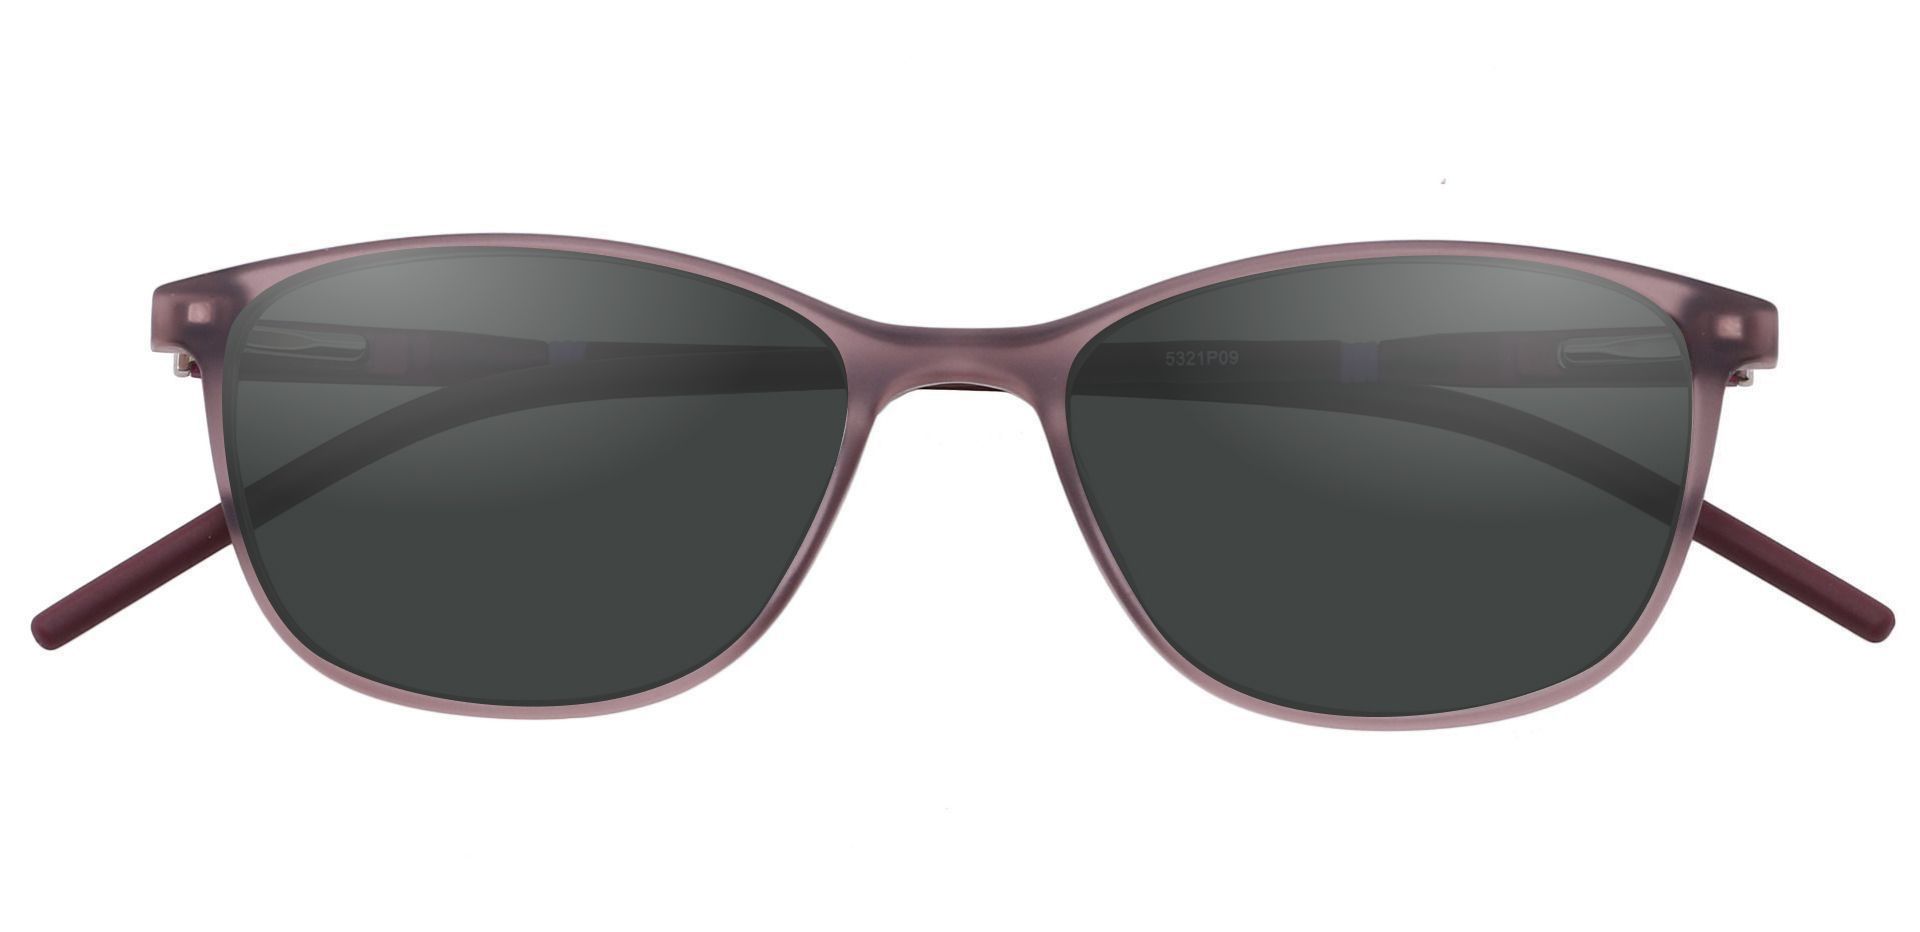 Hazel Square Non-Rx Sunglasses - Purple Frame With Gray Lenses